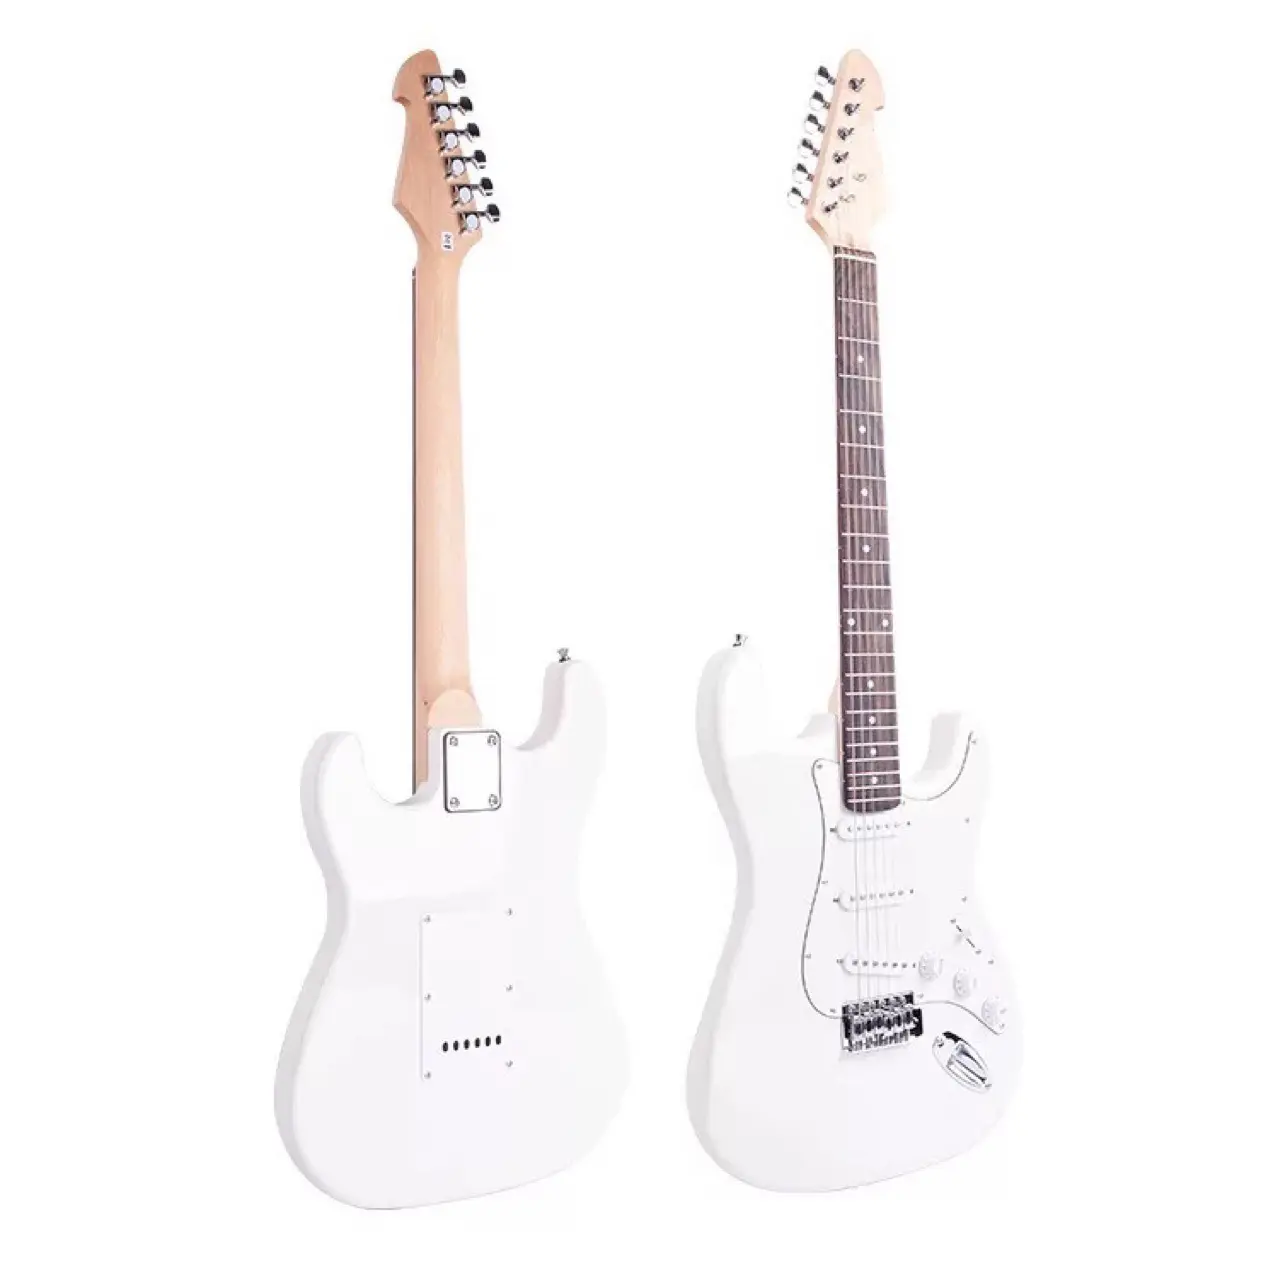 Chitarra elettrica di fabbrica cinese OEM chitarre elettriche personalizzate strumento musicale chitarra elettrica Made in China